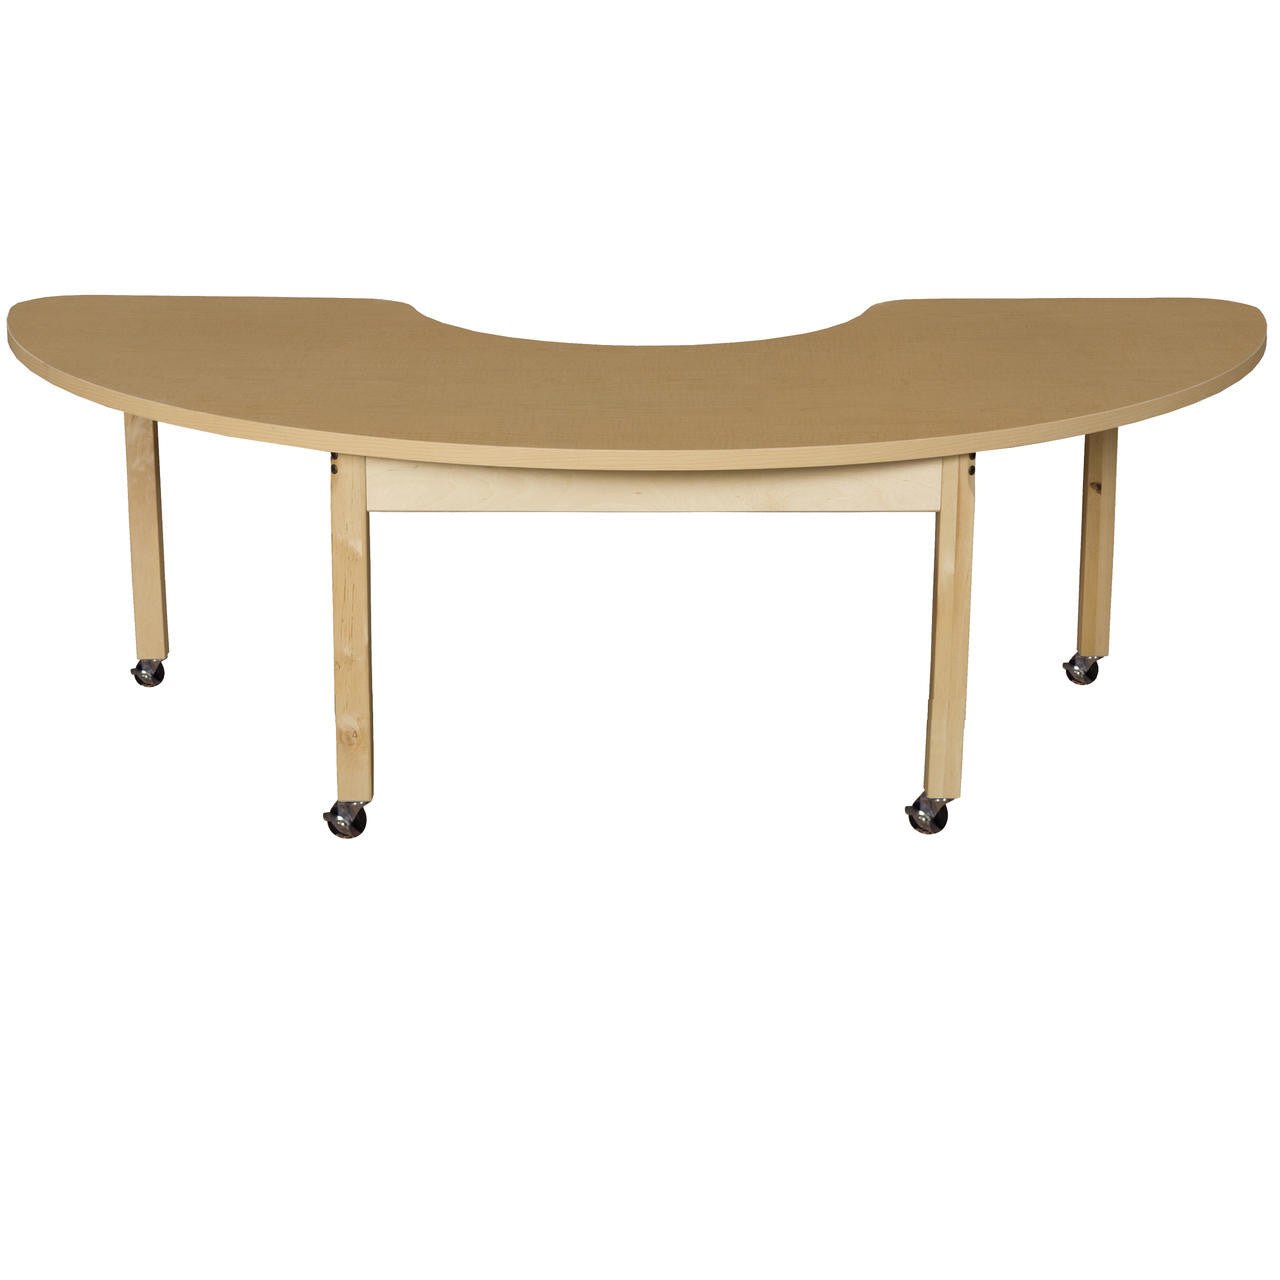 Mobile Half Circle High Pressure Laminate Table with Hardwood Legs - 20"